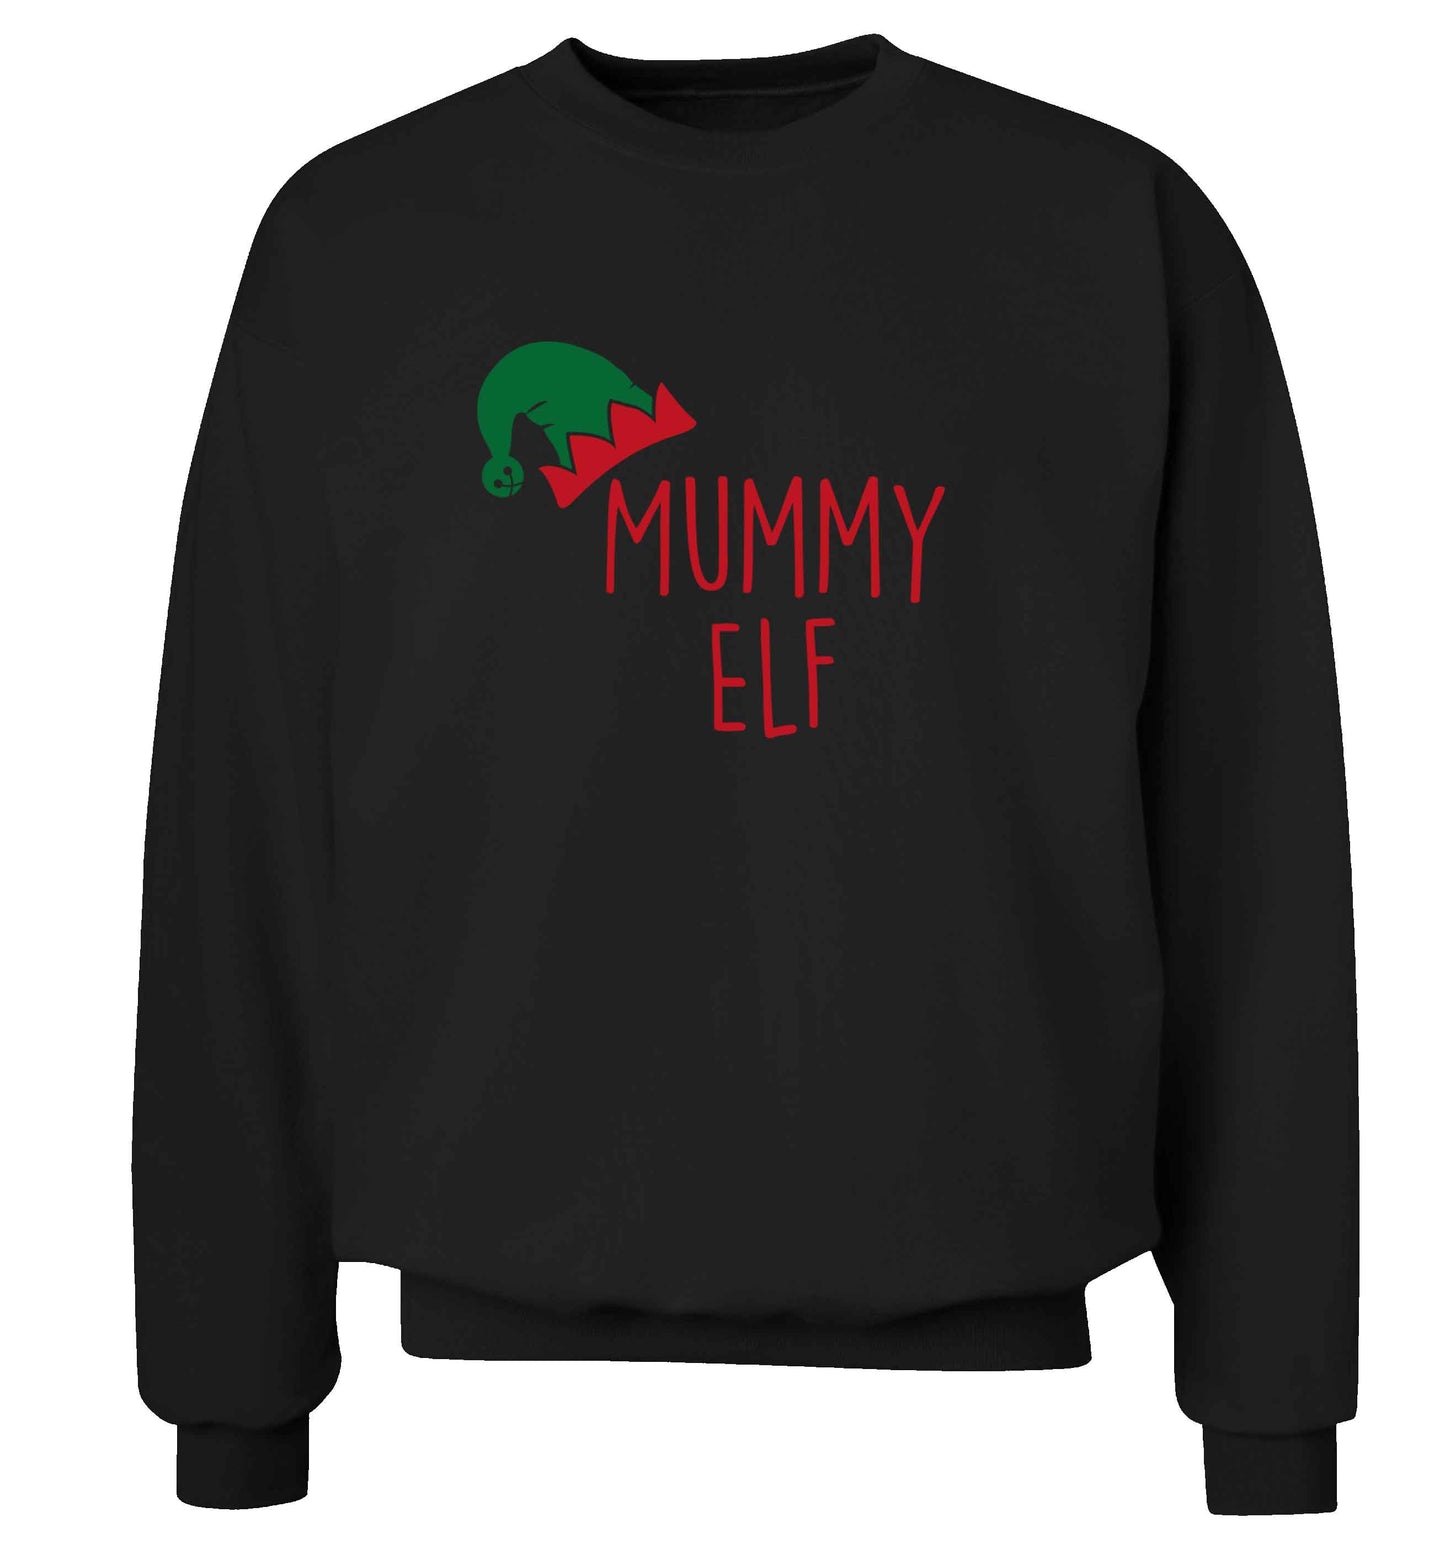 Mummy elf adult's unisex black sweater 2XL